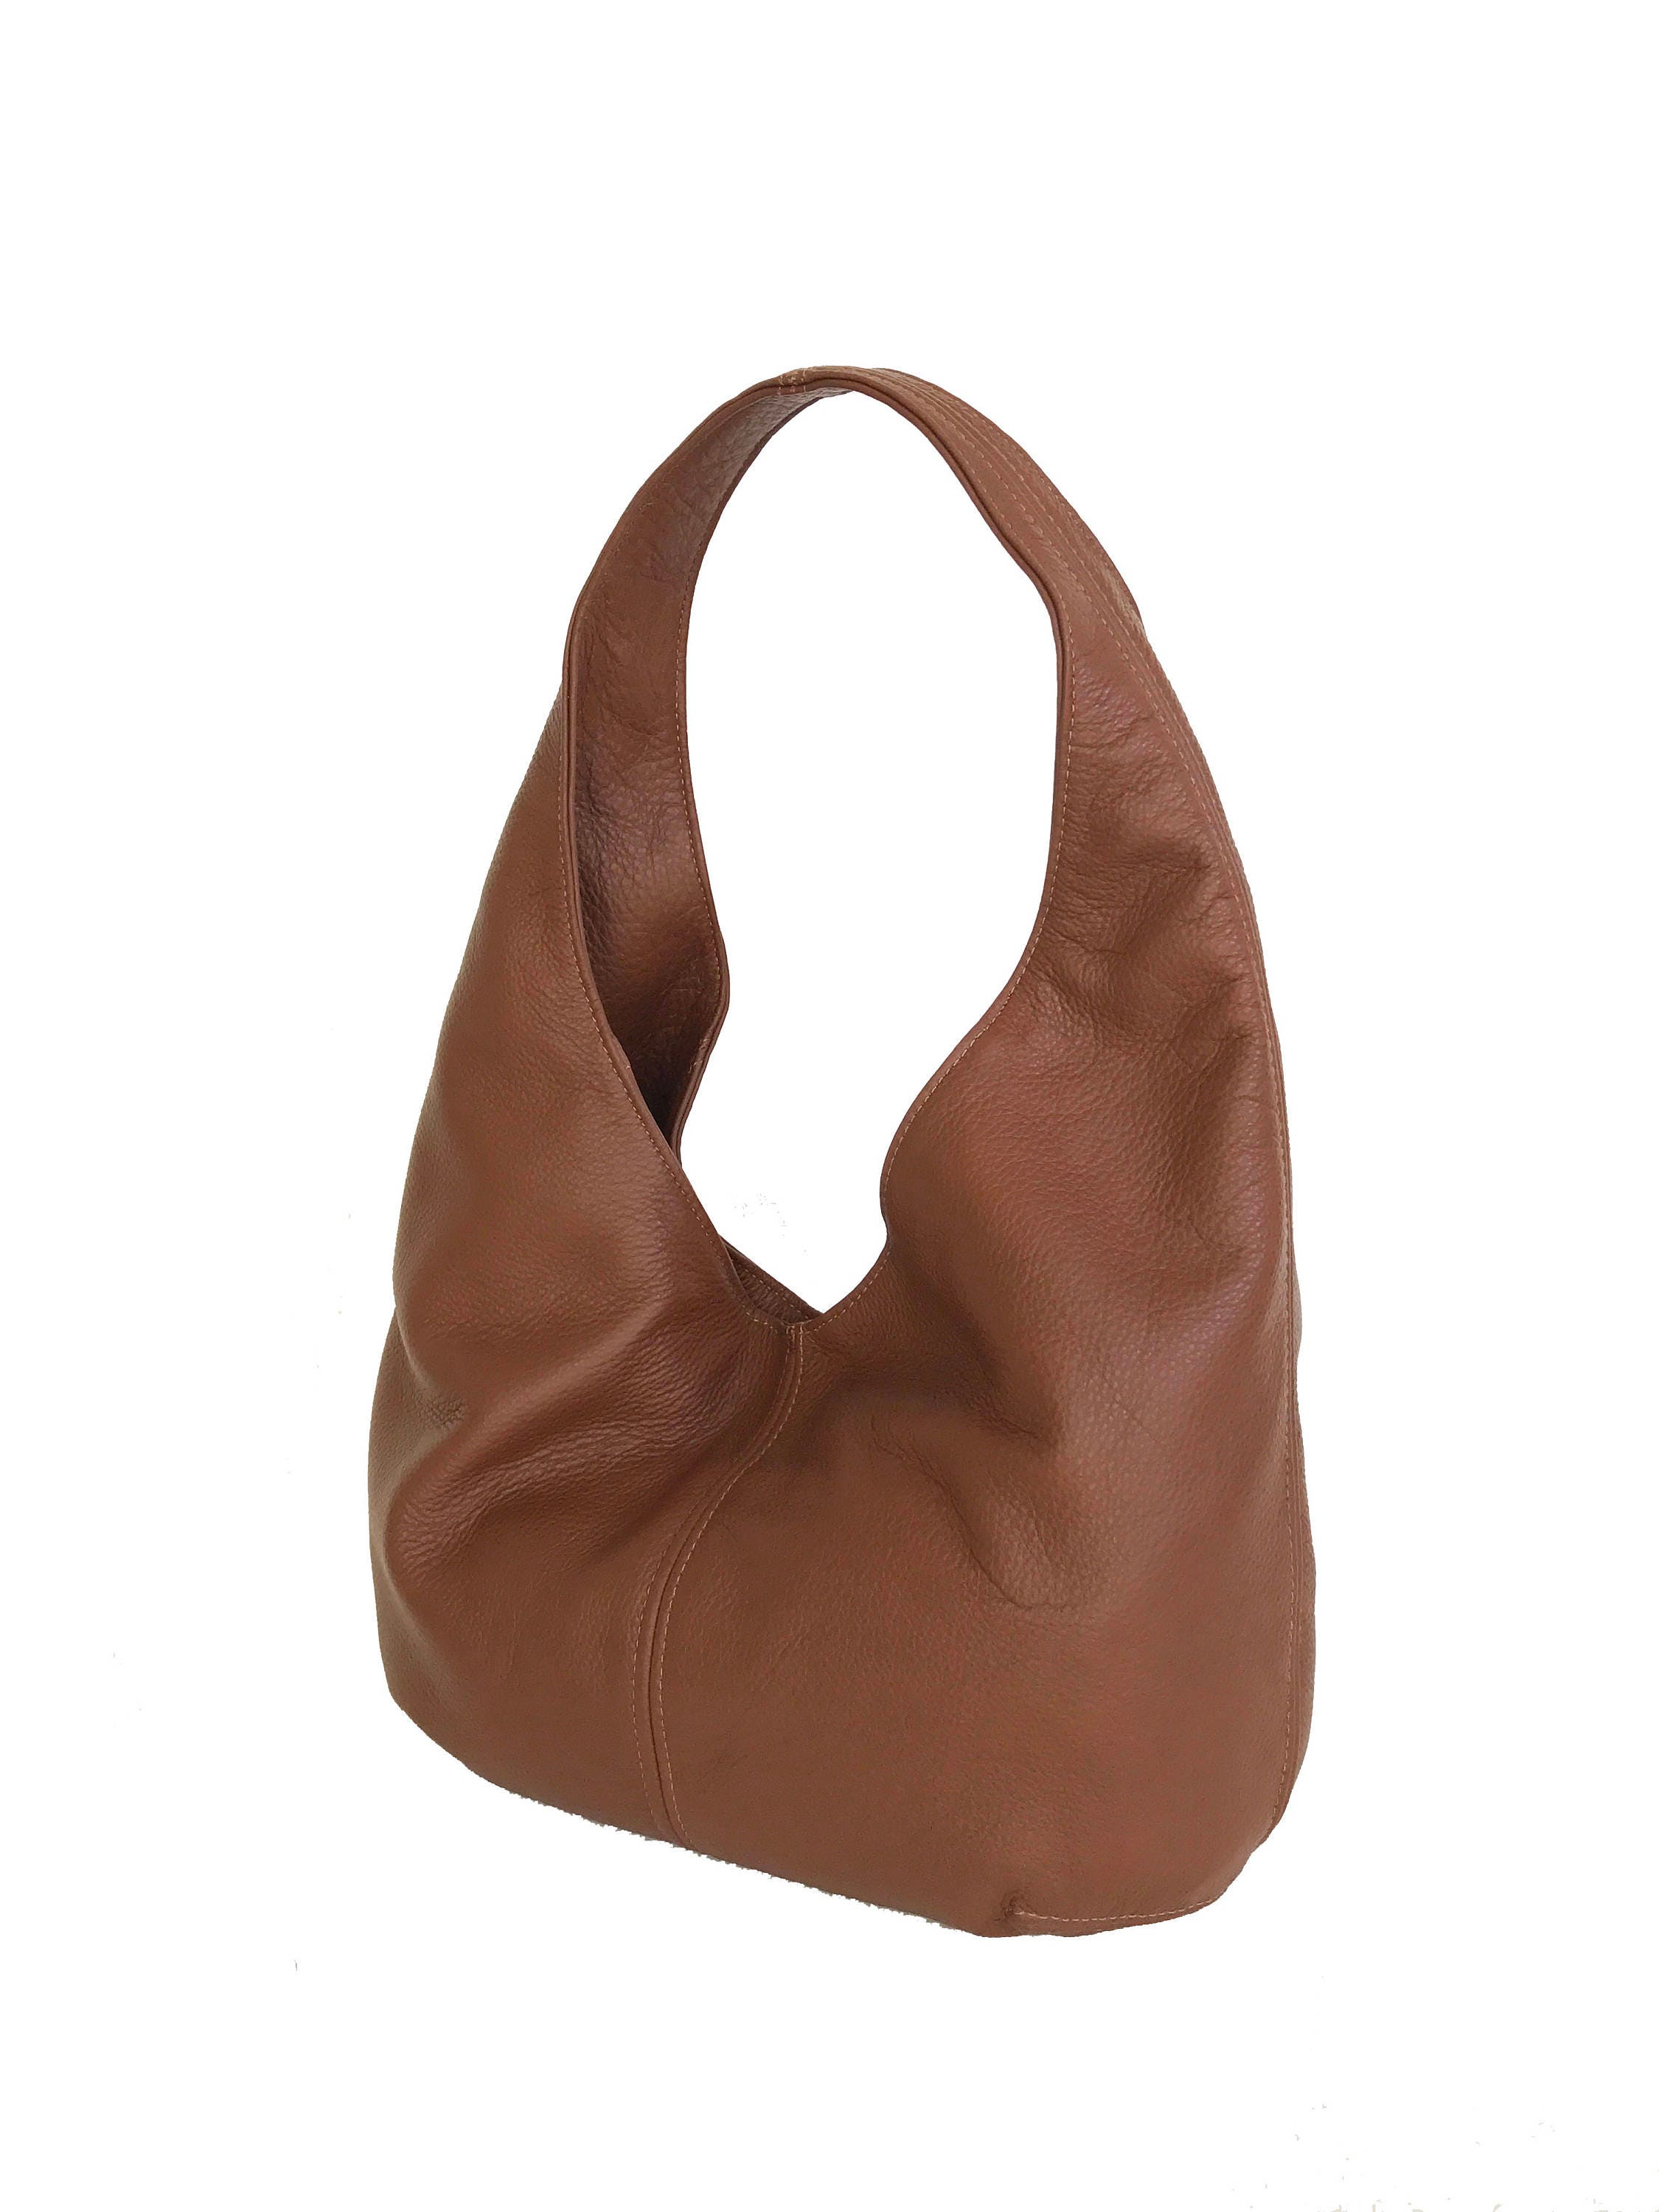 Brown Leather Hobo Bag Fashion Purse Slouchy Hobo Bag | Etsy